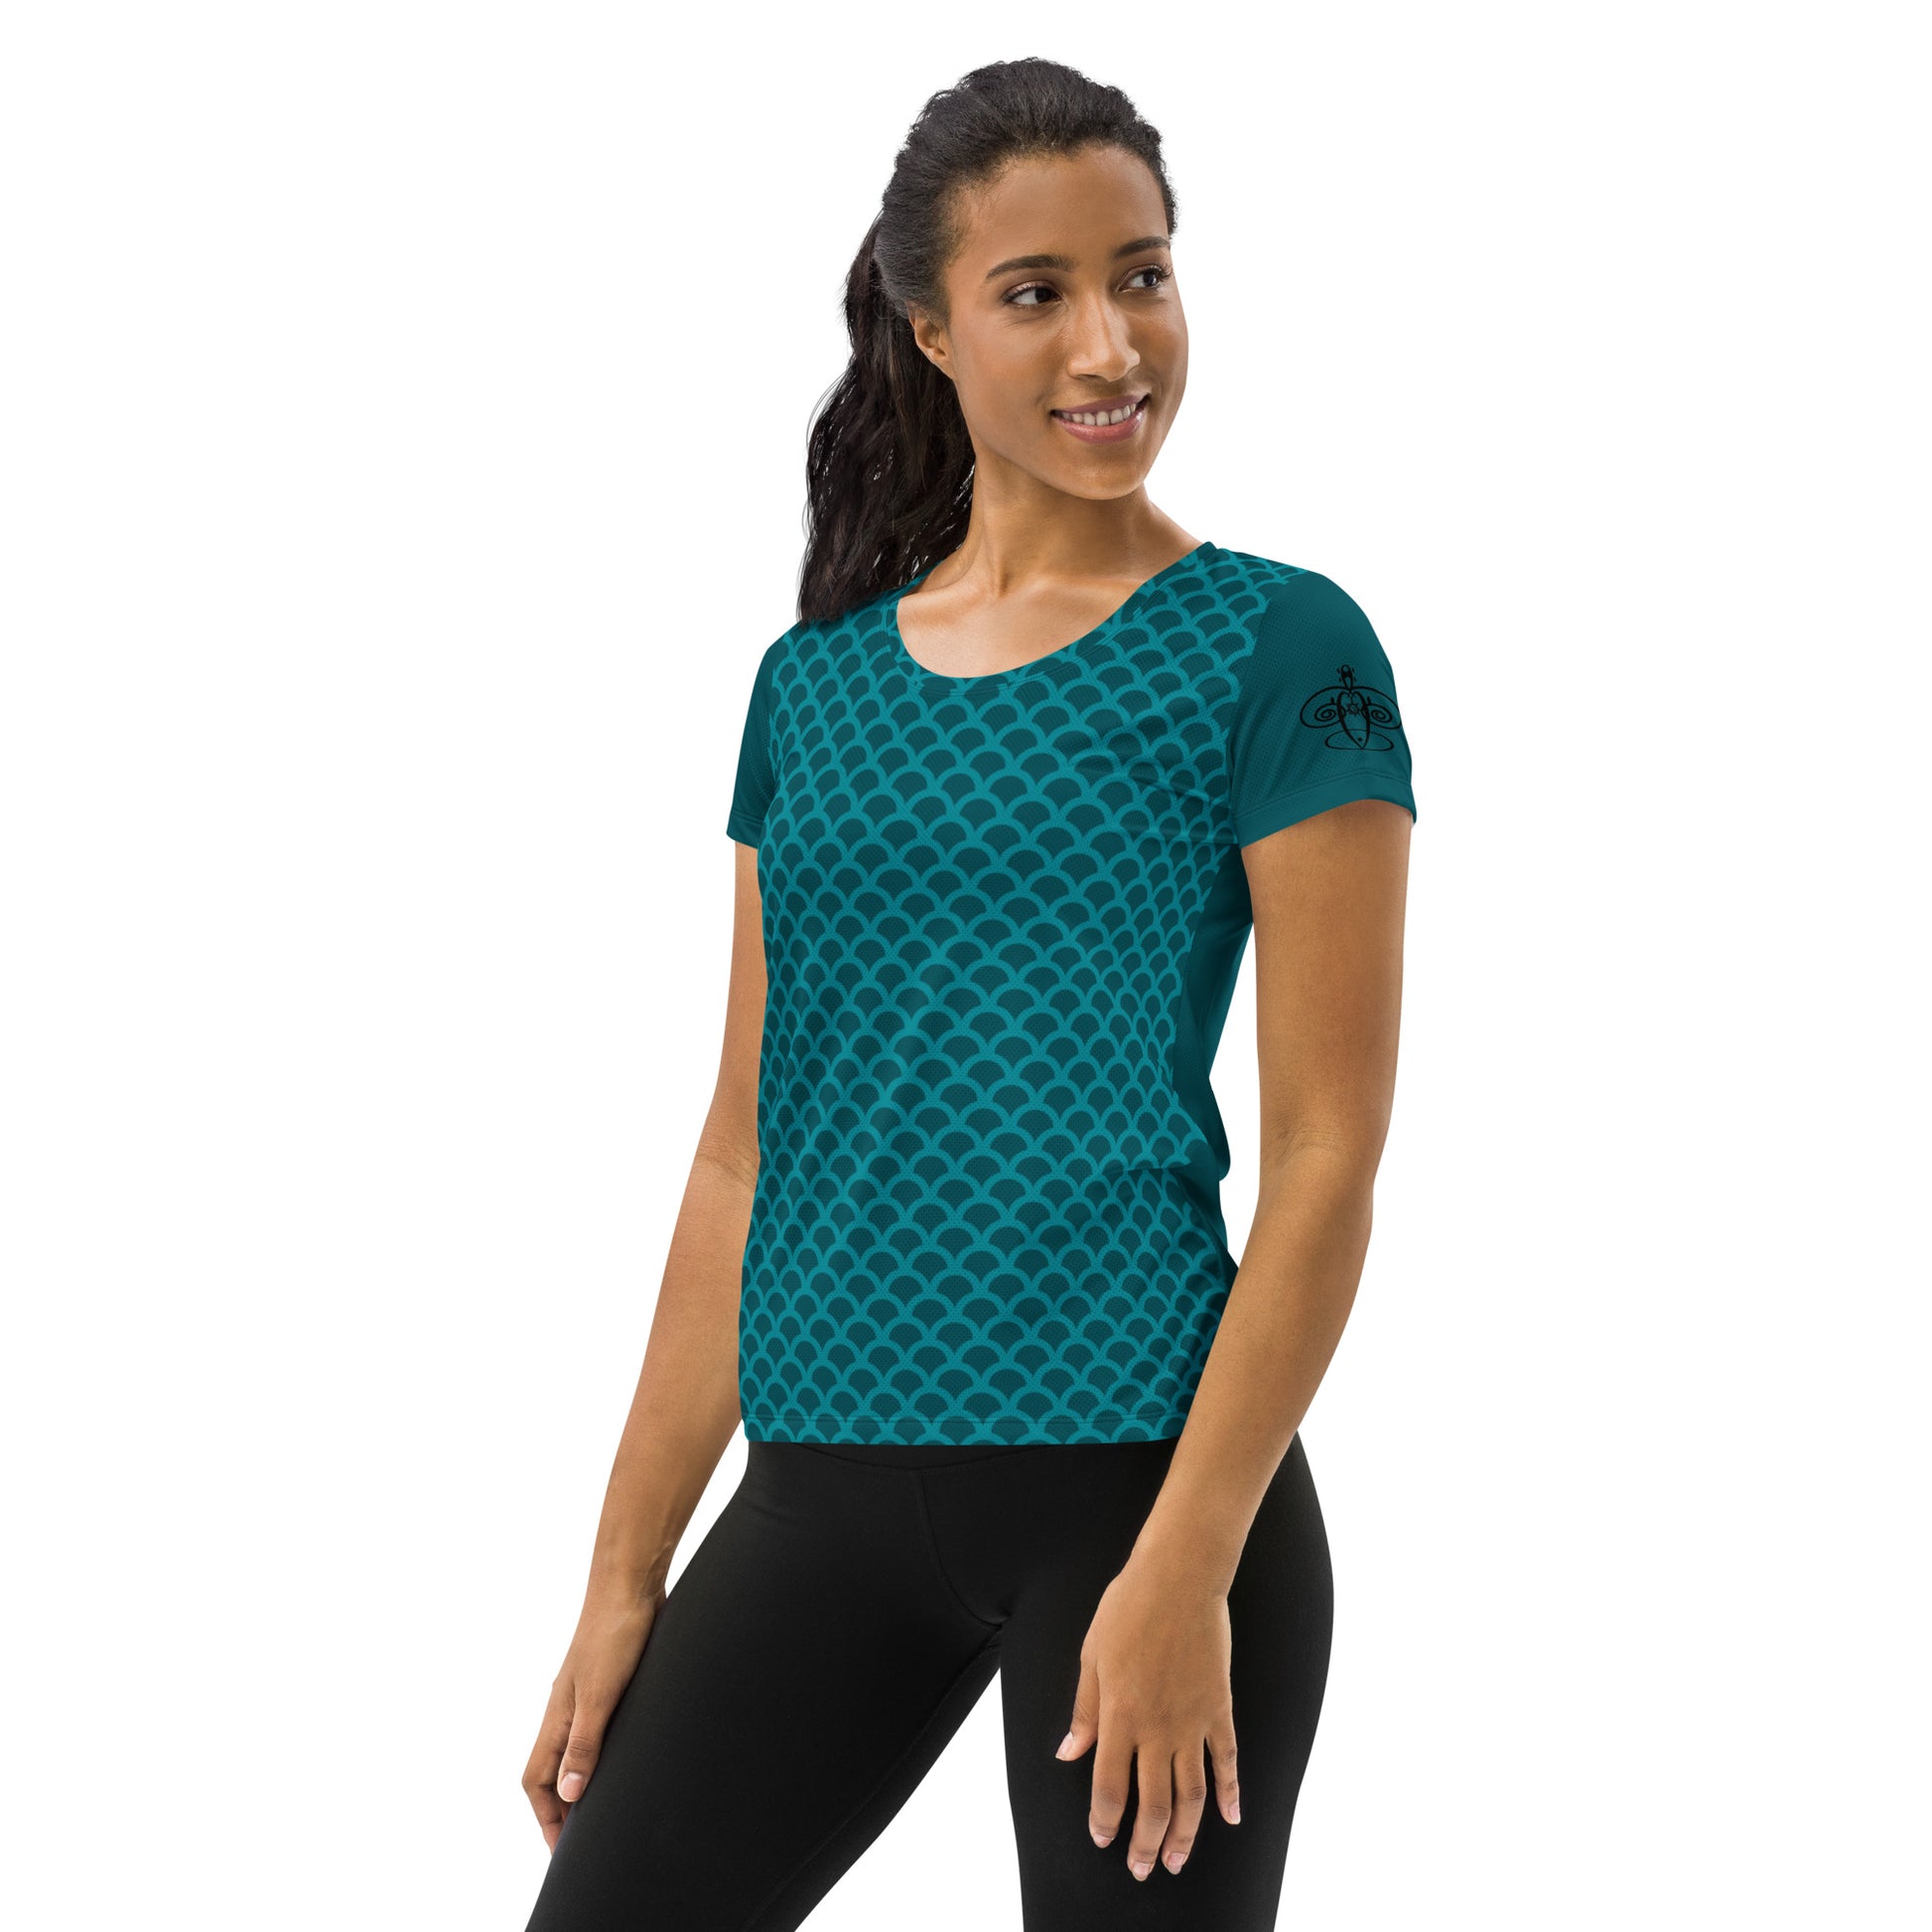 ActSun 2 Women's Athletic T-shirt / Sport Shirts / Fitness Woman.